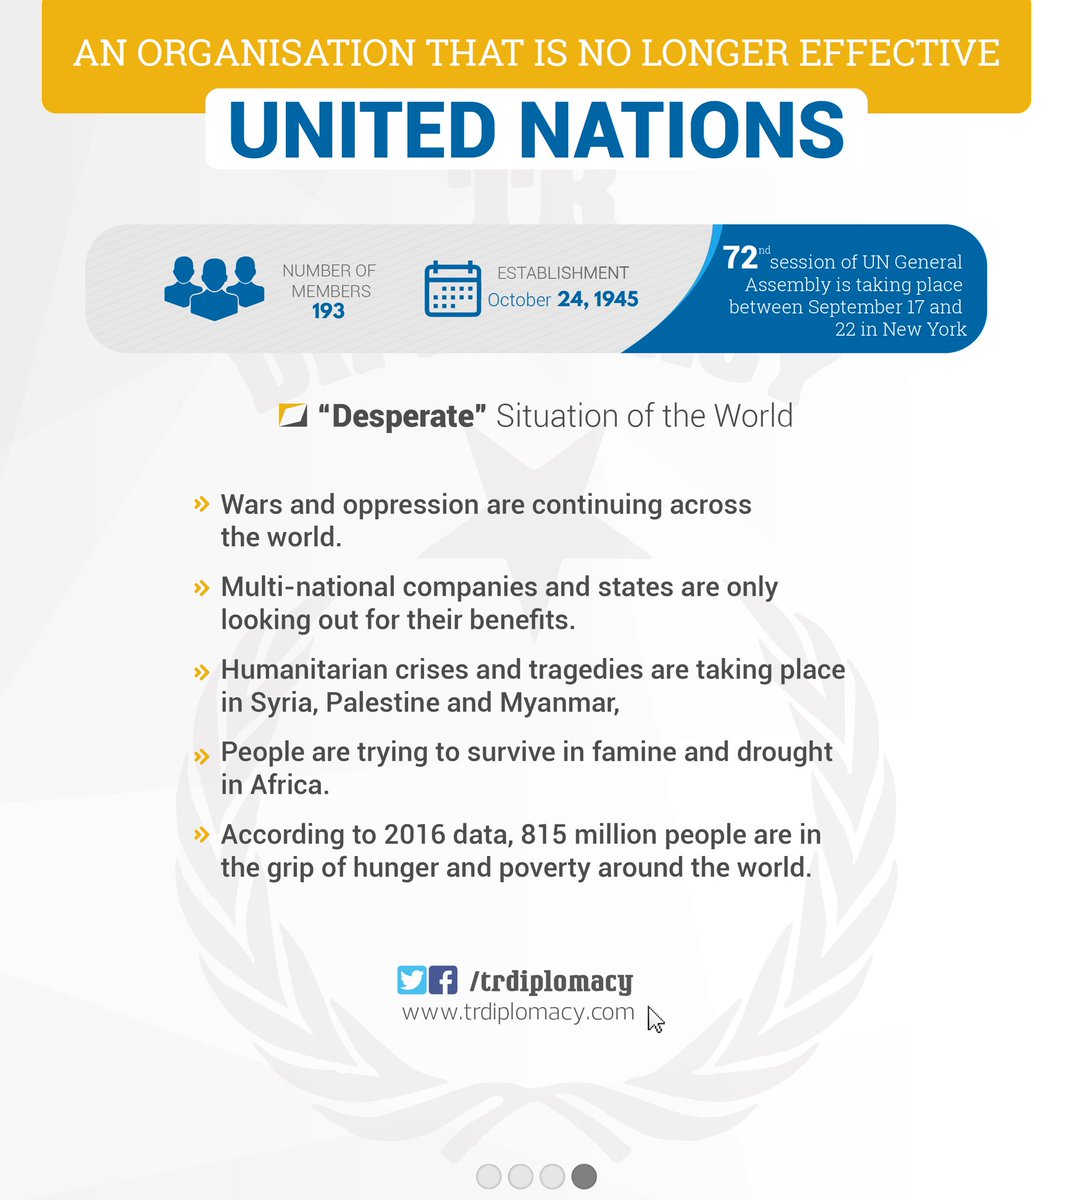 An organisation that is no longer effective: UN